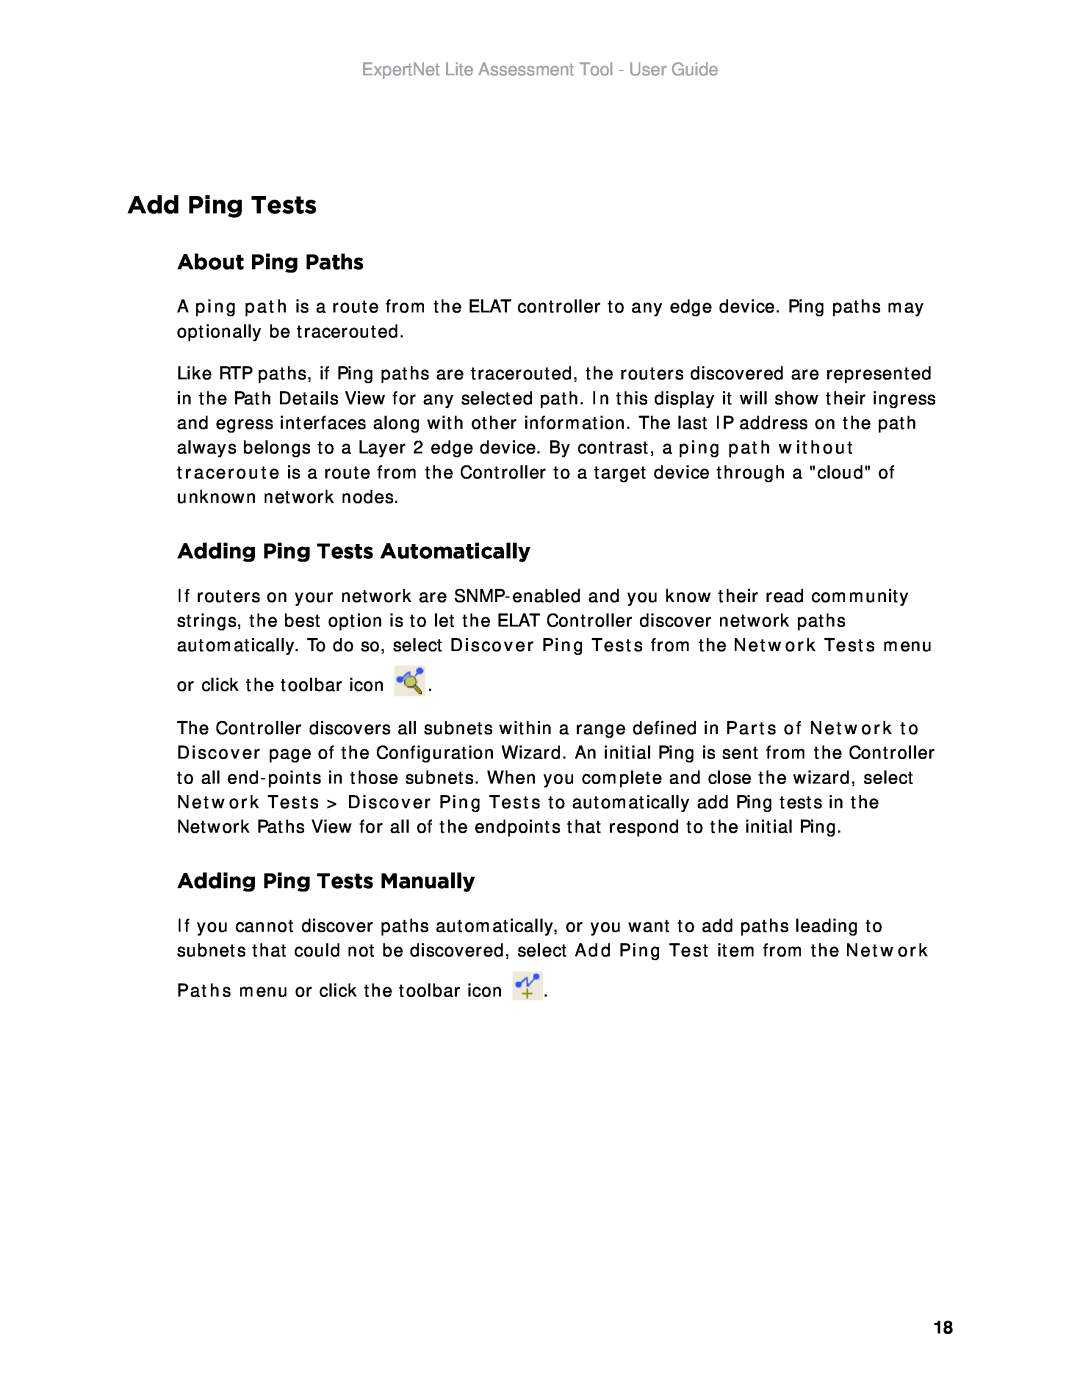 Avaya ELAT manual Add Ping Tests, About Ping Paths, Adding Ping Tests Automatically, Adding Ping Tests Manually 